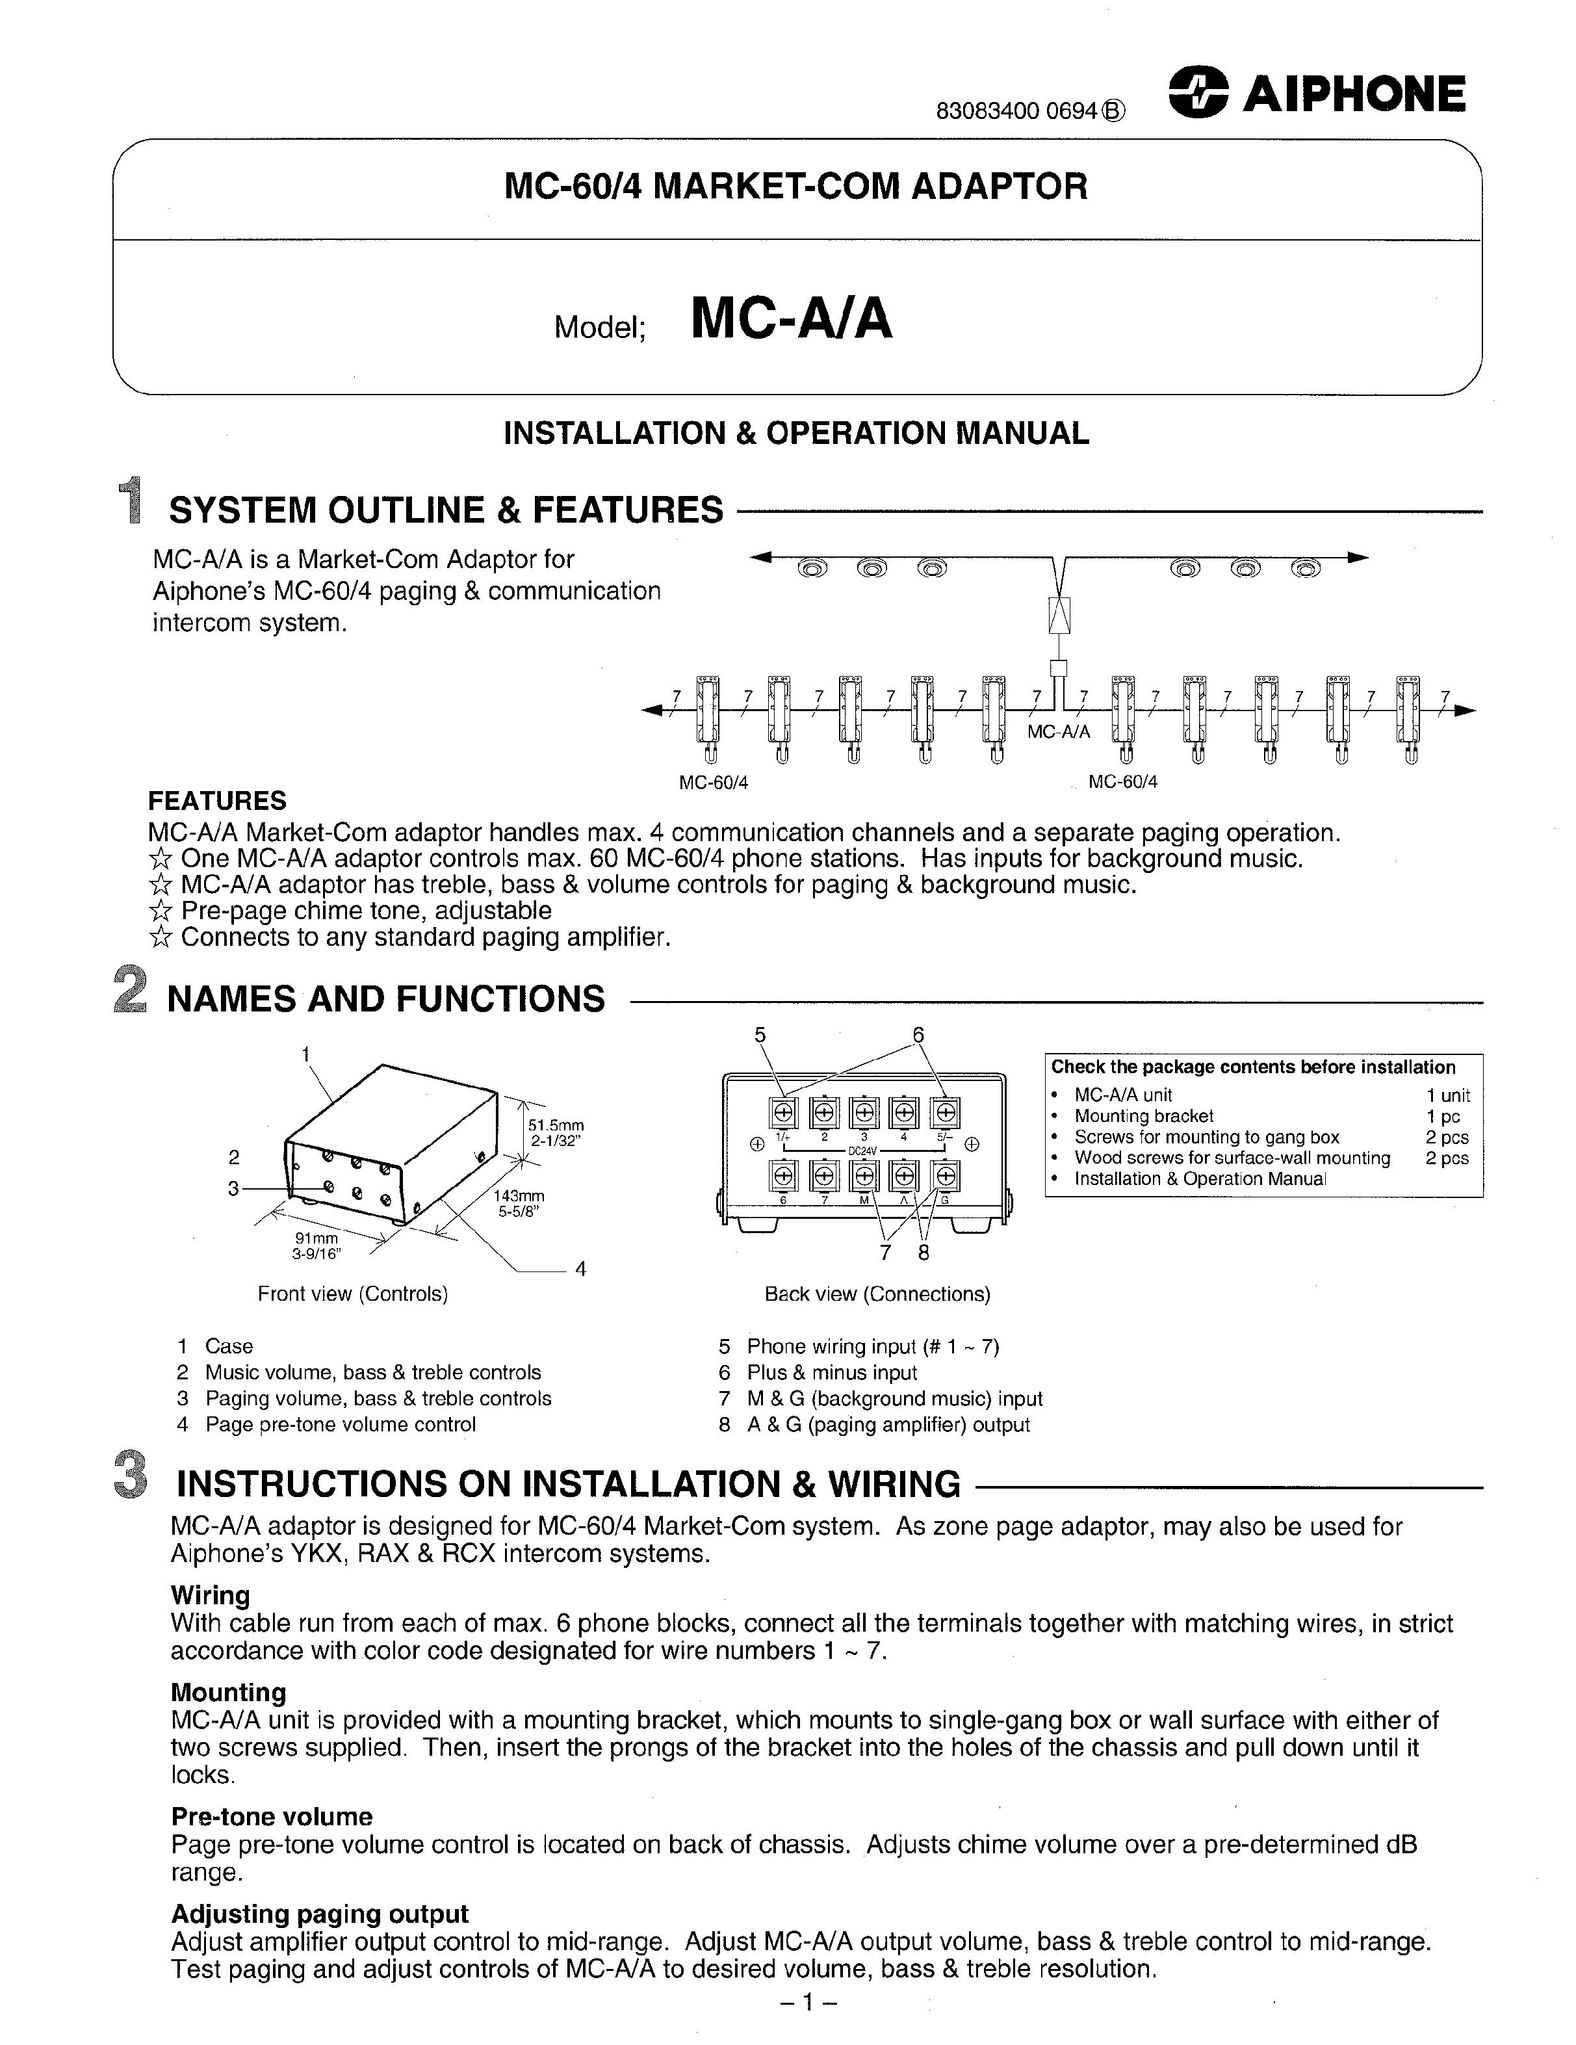 Aiphone MC-A/A Telephone Accessories User Manual